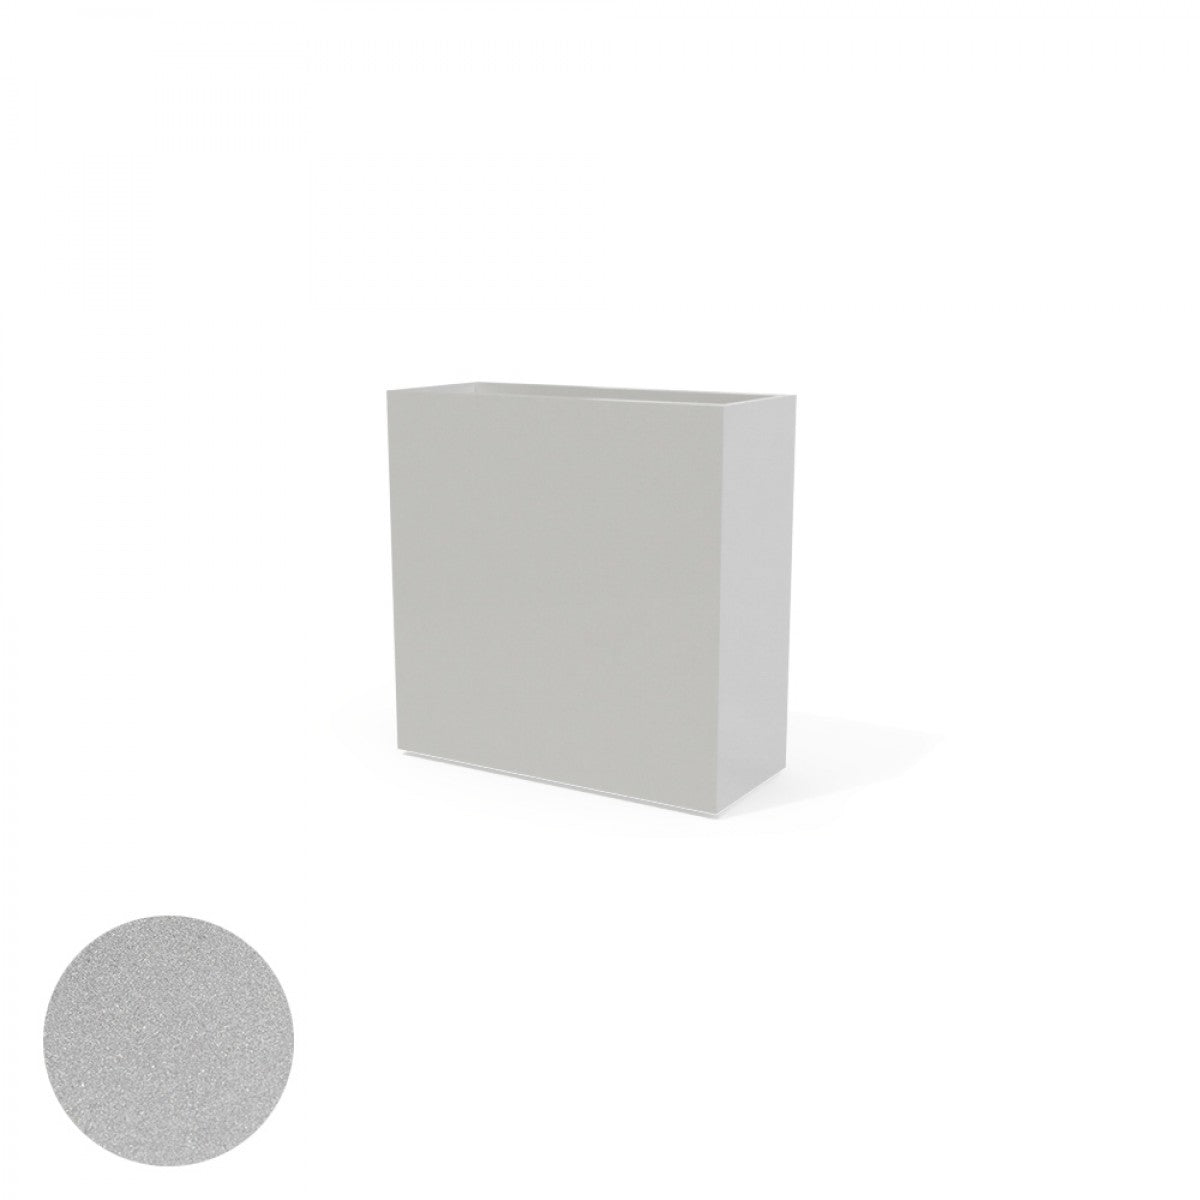 Milano Rectangular FIBERGLASS PLANTER BOX - Size 24"L x 10"W x 24"H